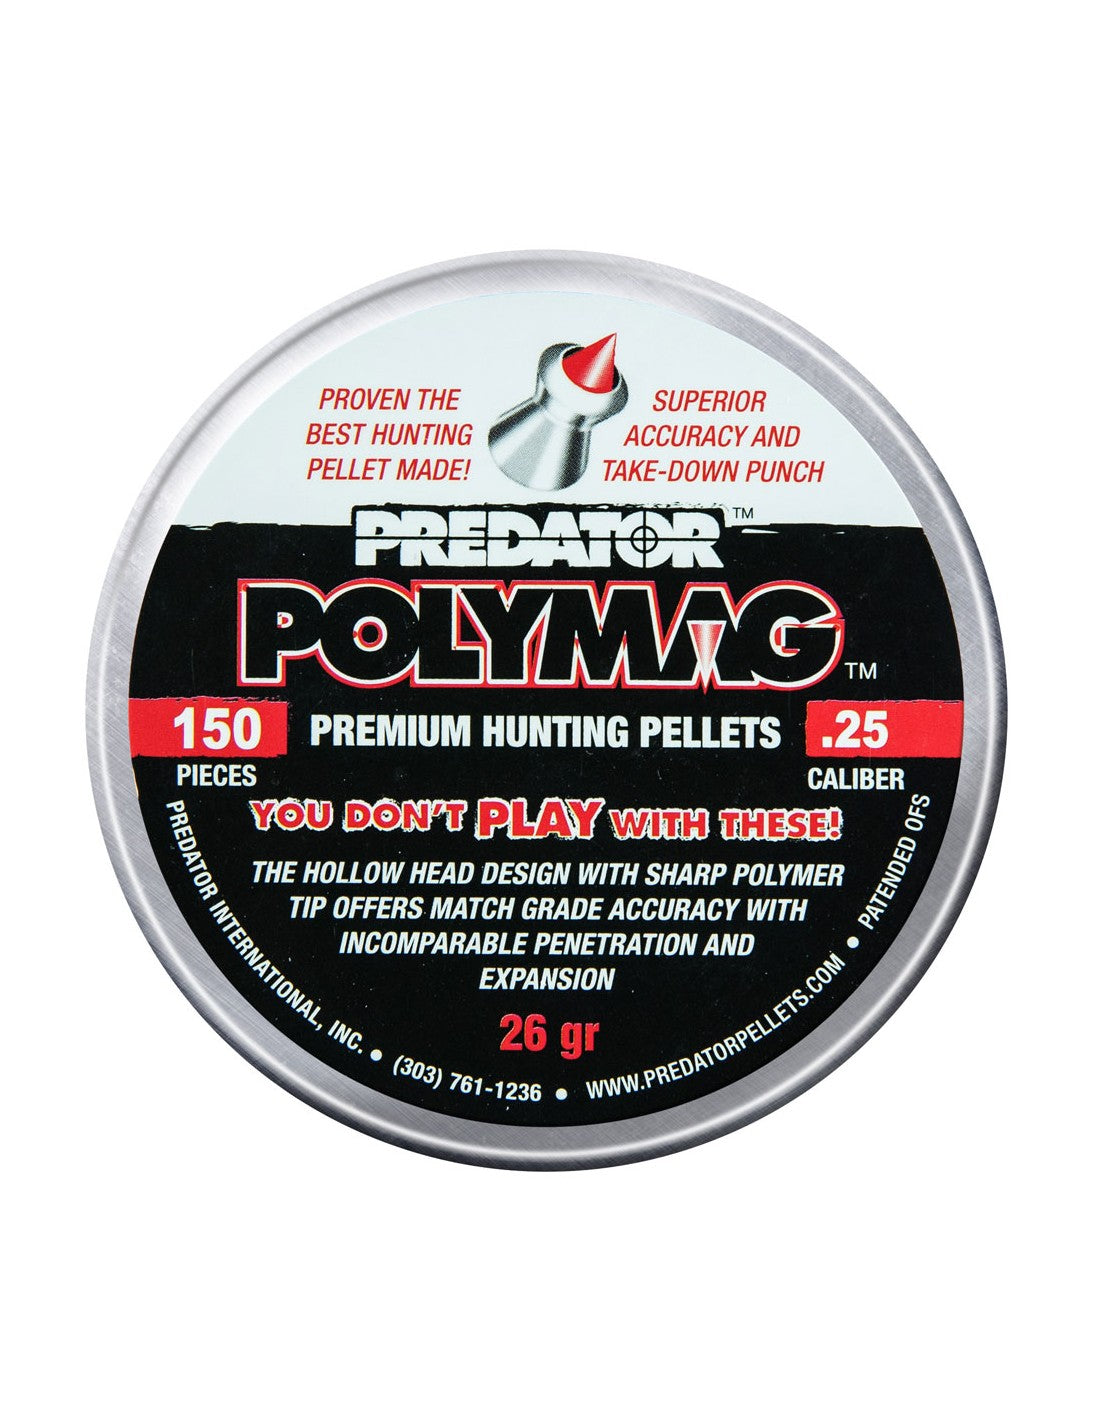 Predator Polymag pellets